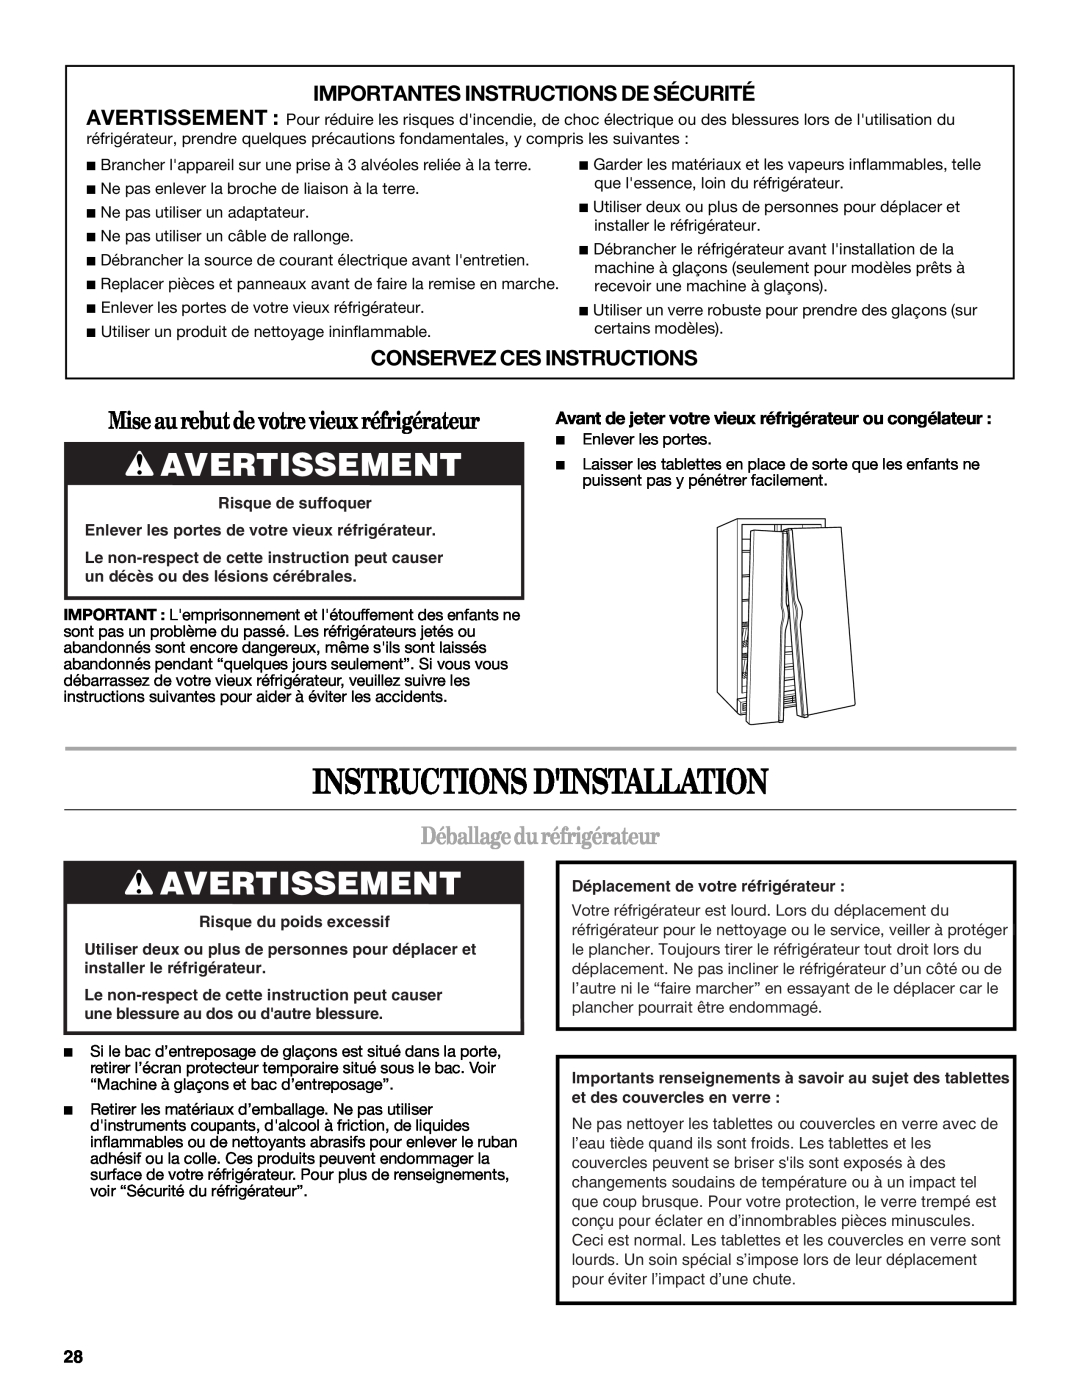 Whirlpool ES2FHAXSA00 warranty Instructions Dinstallation, Avertissement, Miseau rebutdevotrevieuxréfrigérateur 